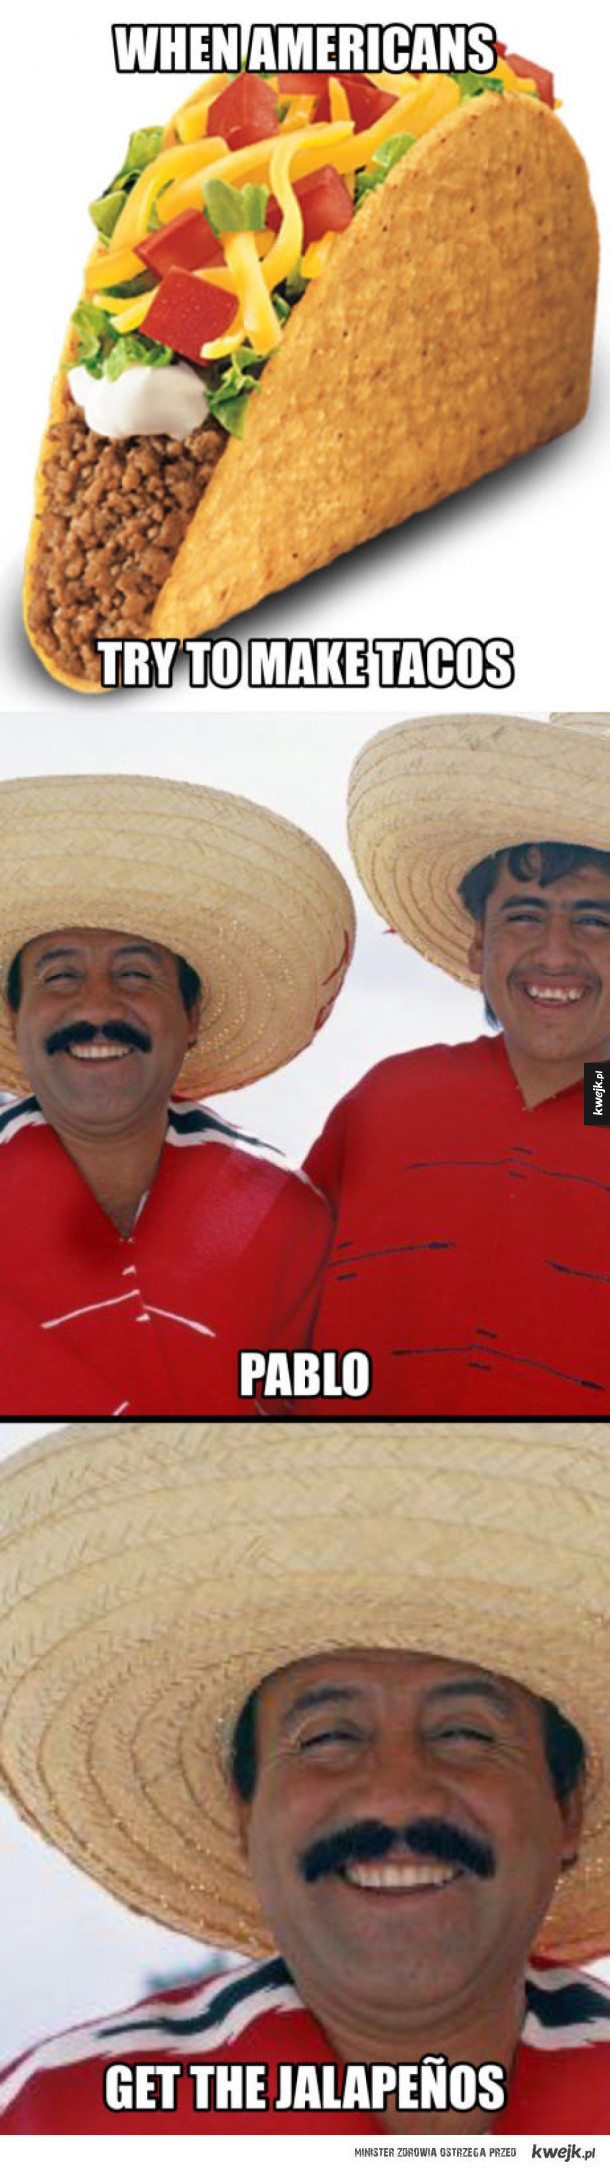 Pablo get the Jalapenos!